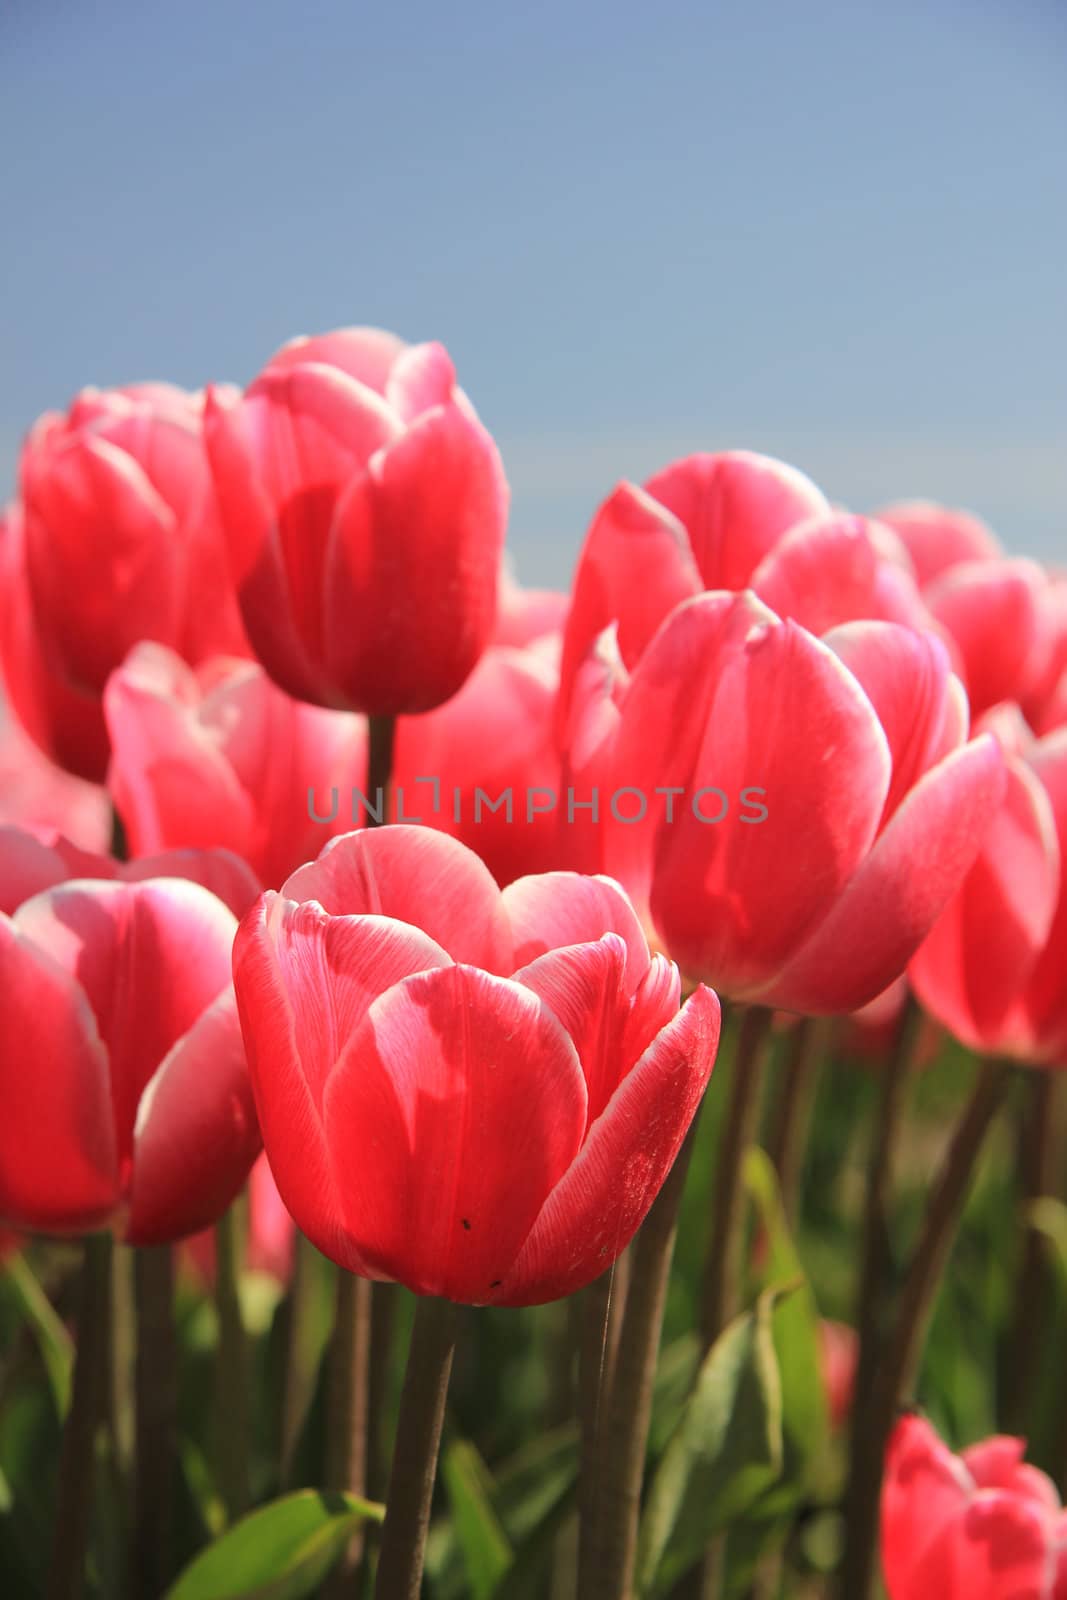 Pink tulips in sunlight by studioportosabbia